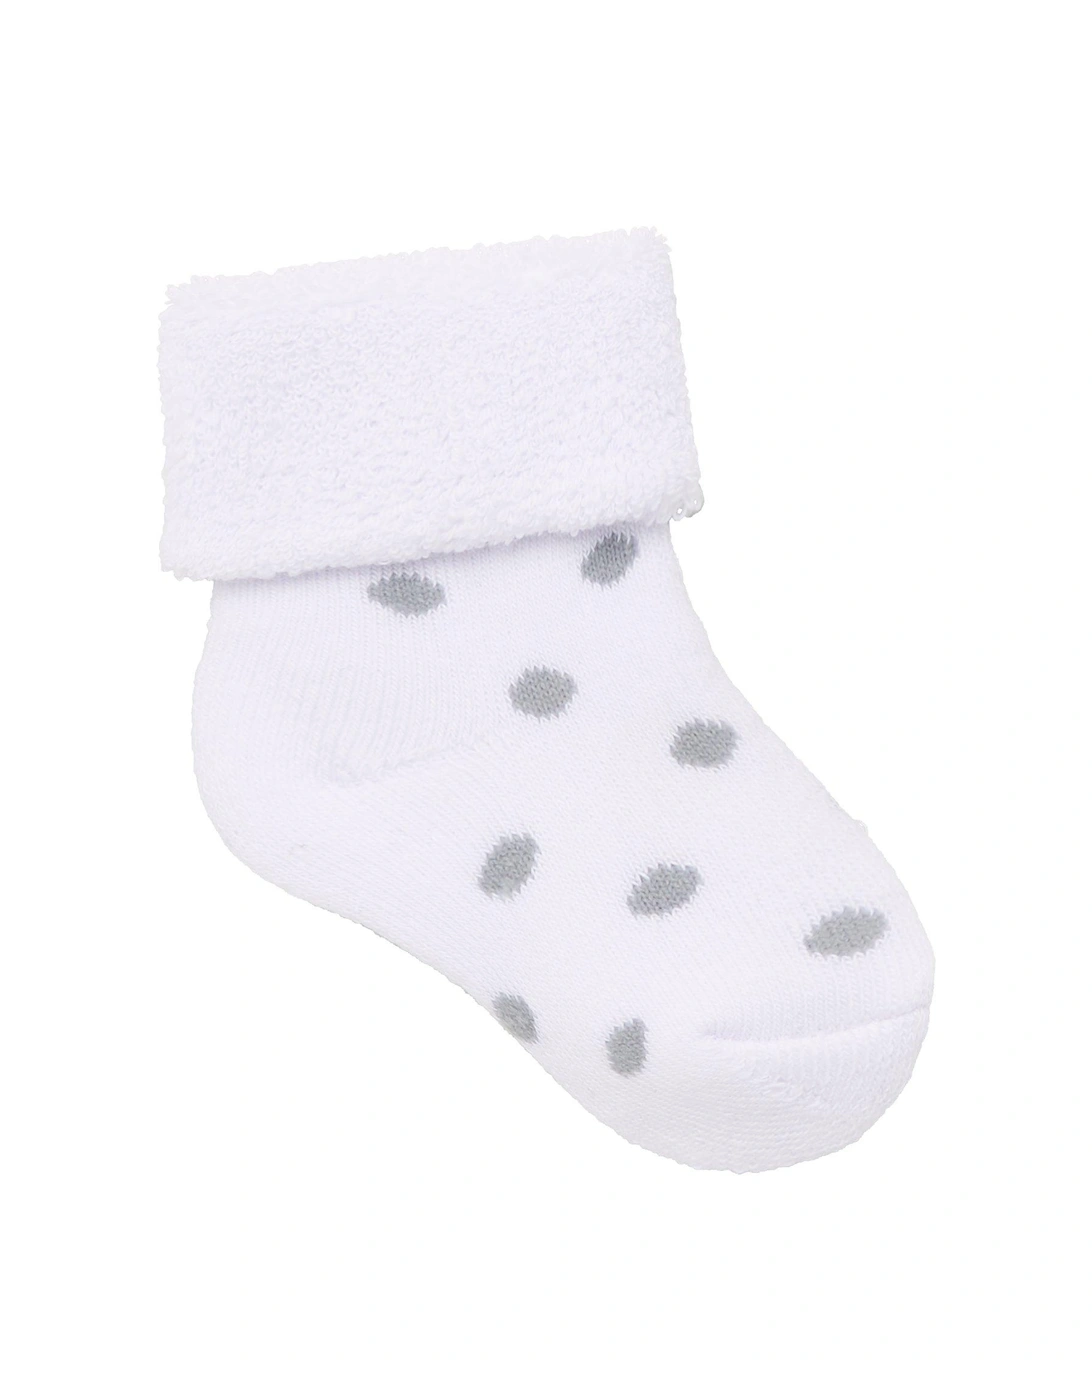 Baby Unisex 3 Pack Little Spot, Stripe and Plain Terry Socks - Grey